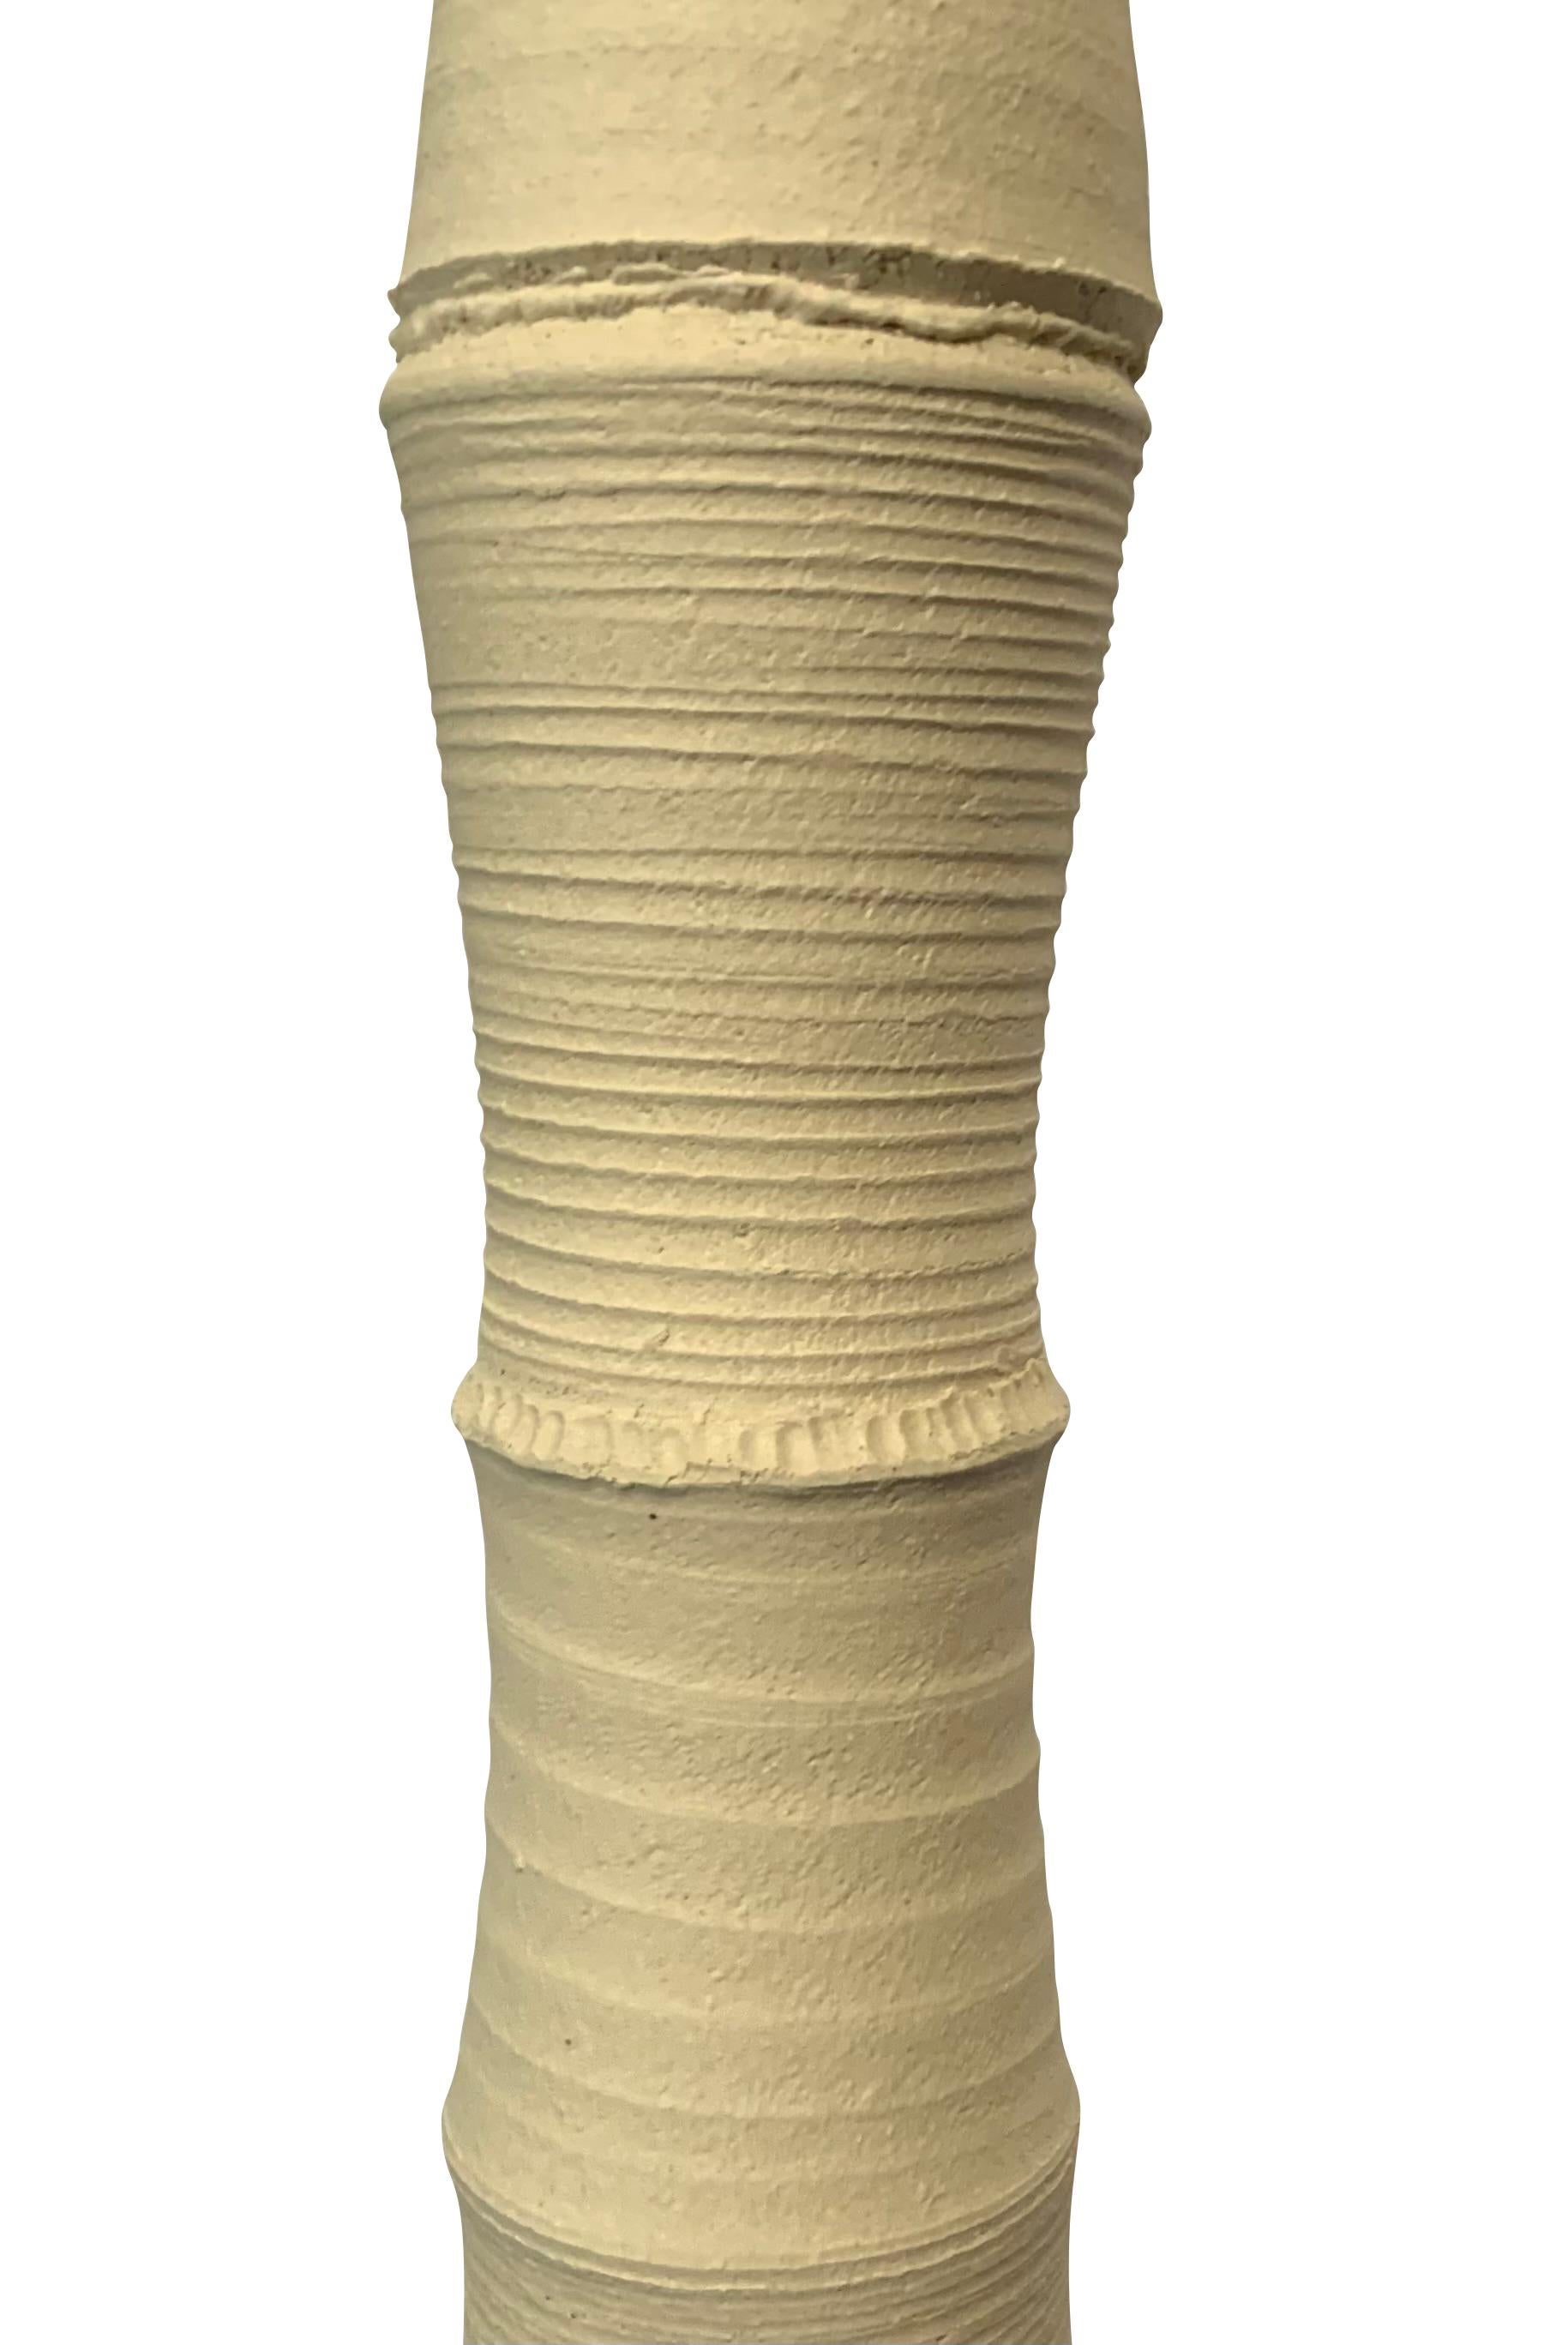 Sand Color Vertebrae Design Thin Stoneware Vase, Germany, Contemporary For Sale 1